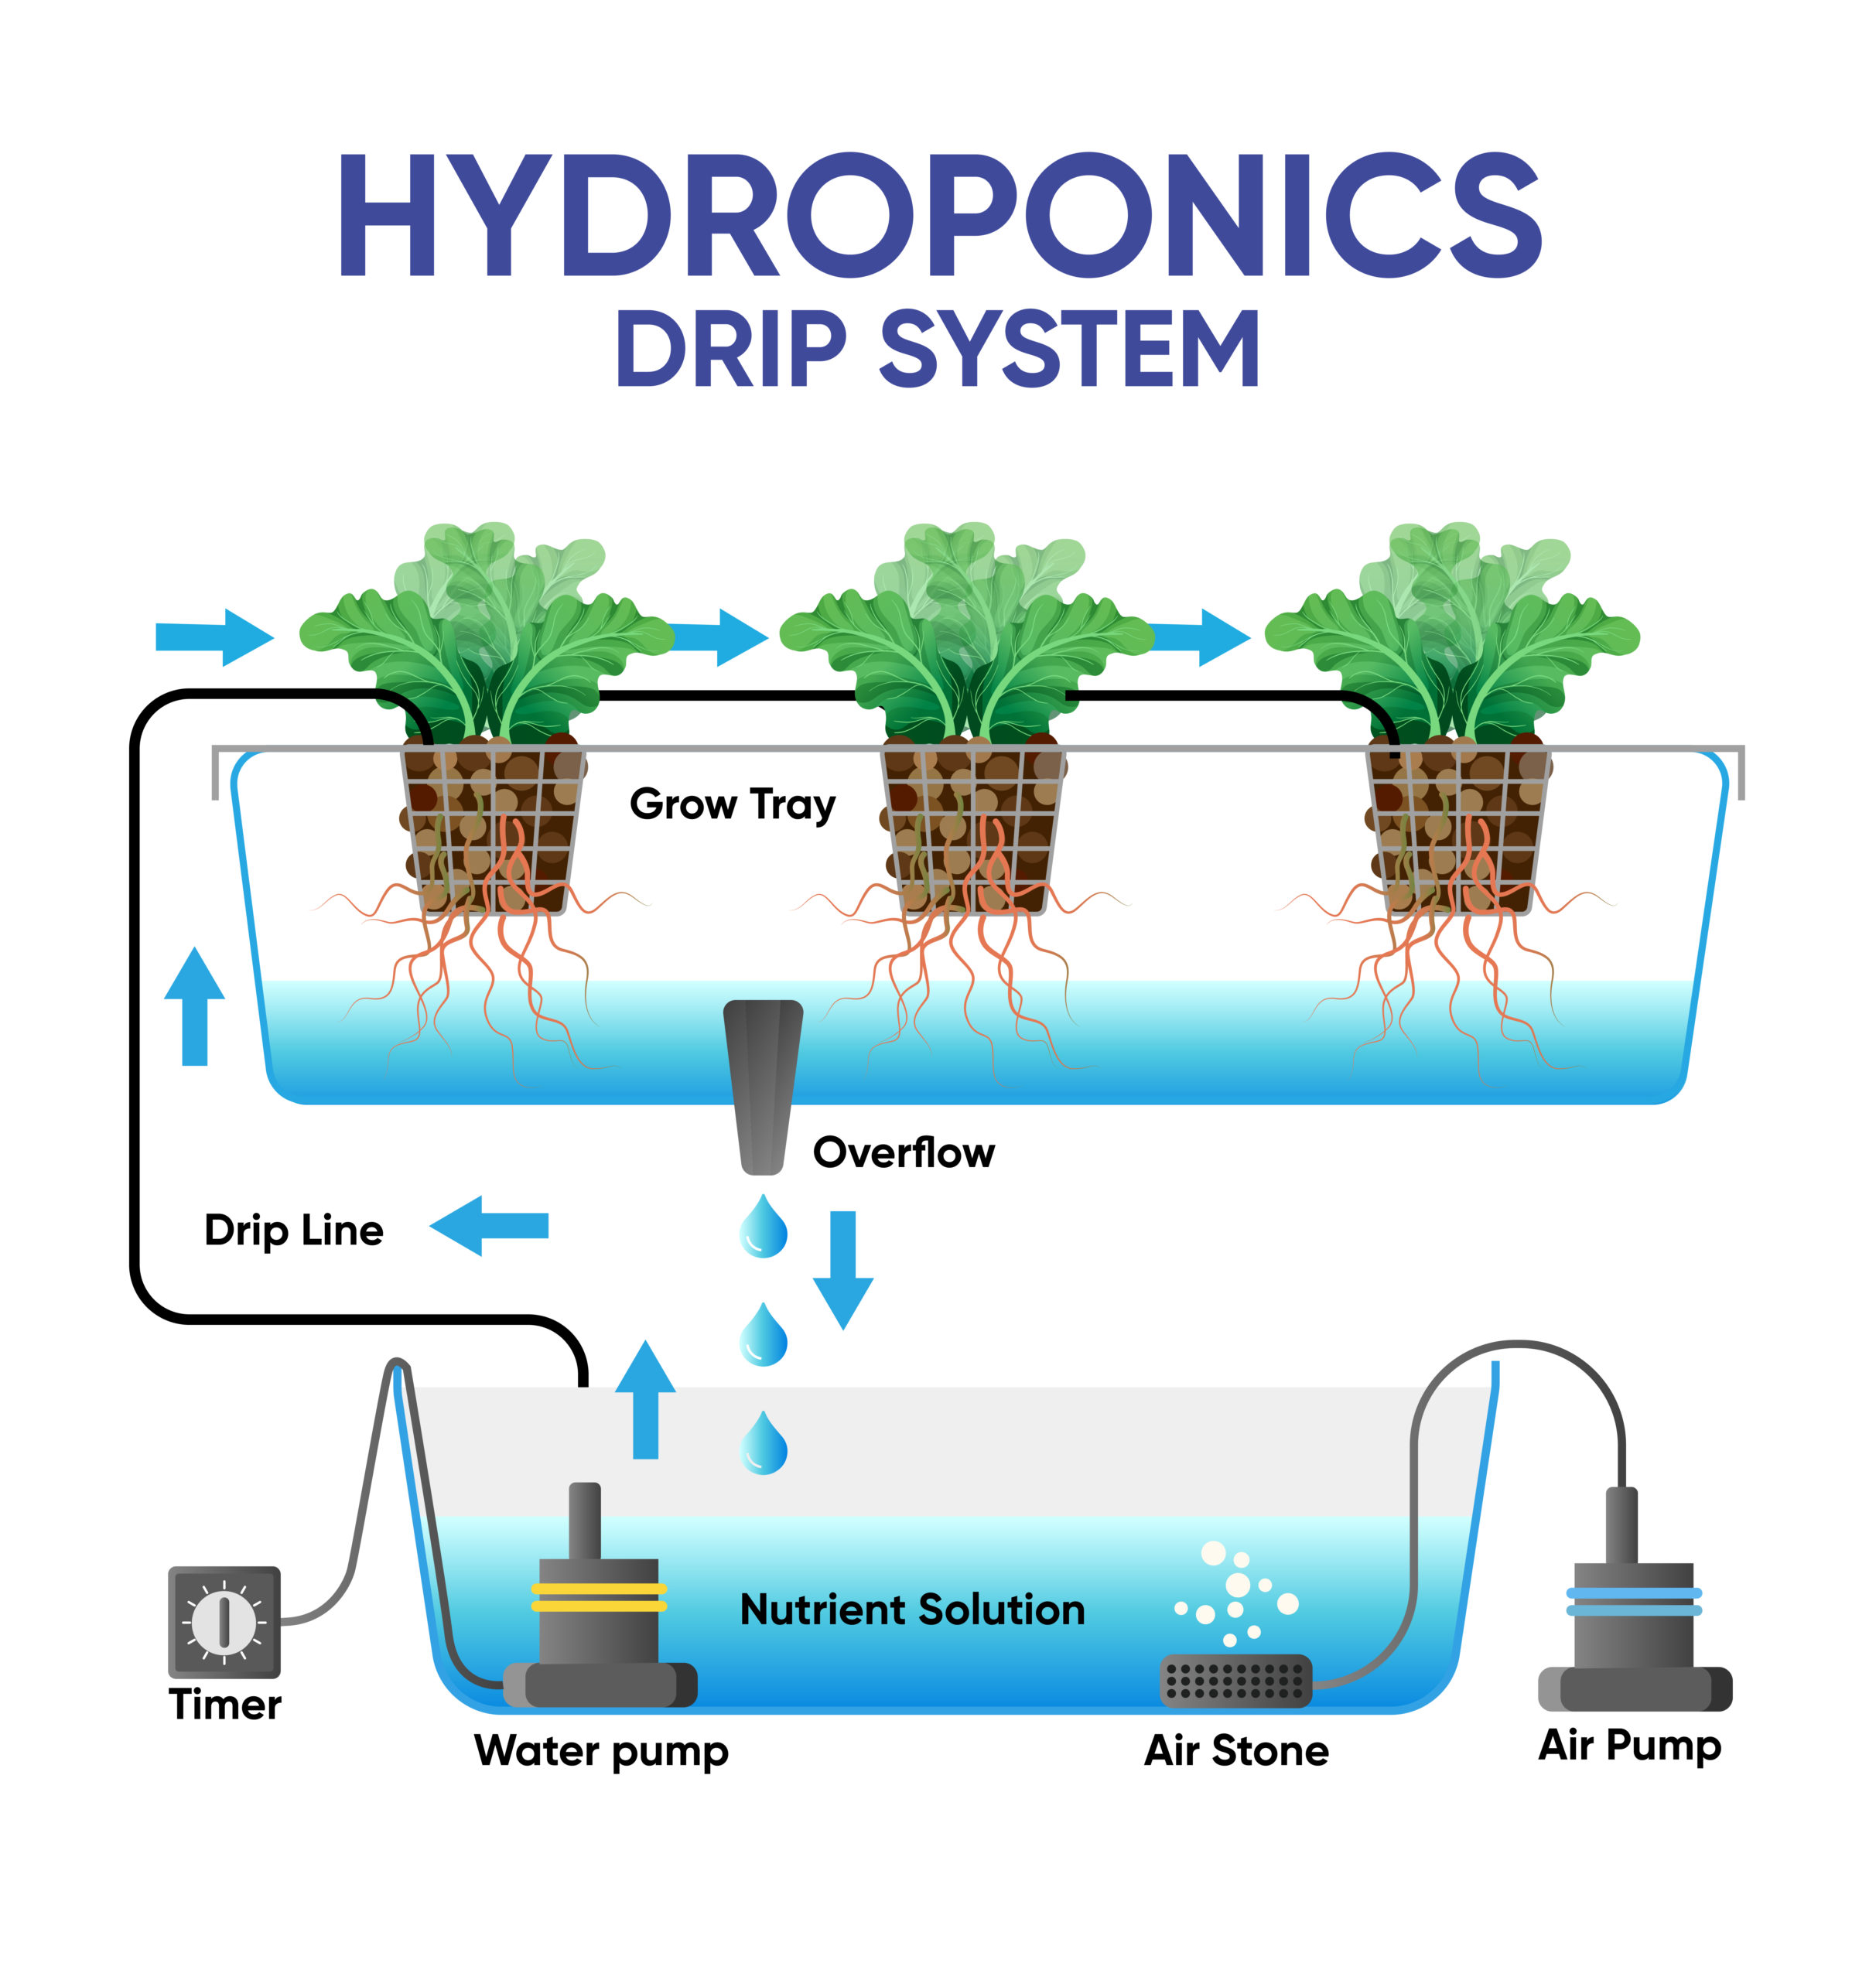 hypothesis of hydroponics